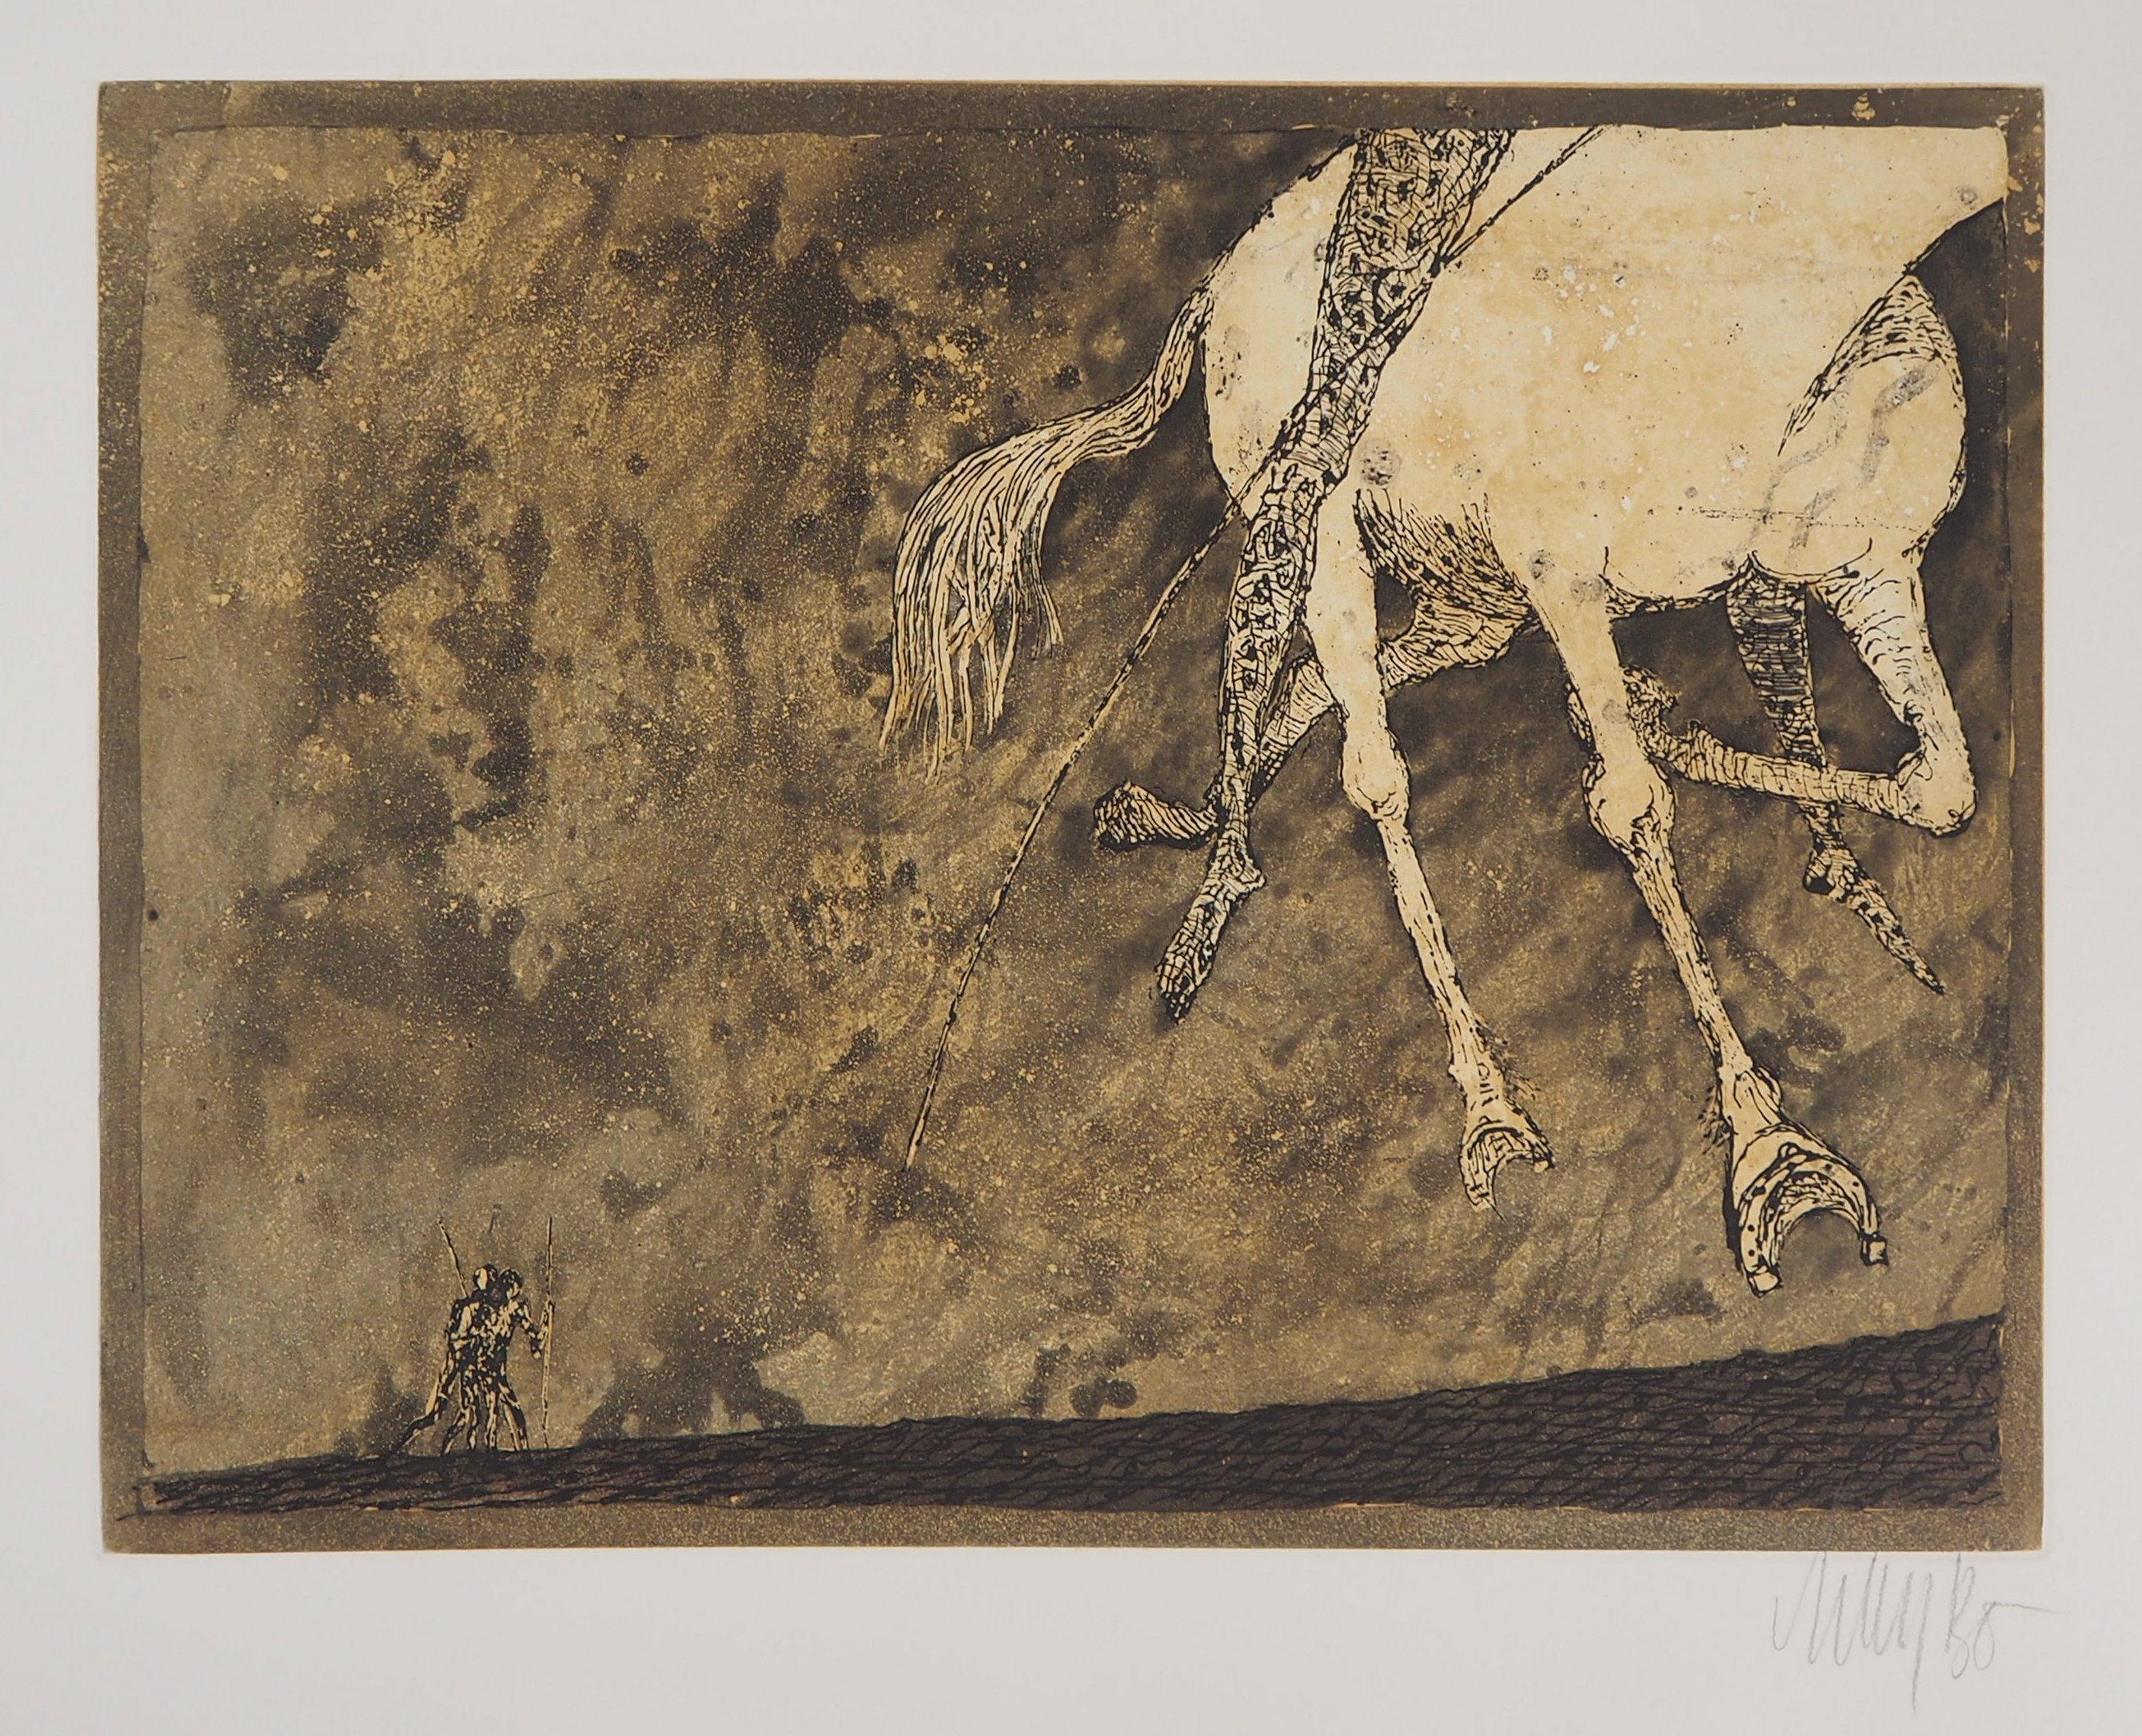 Lars Bo Figurative Print - The Departure of The Horserider, 1975 - Original Handsigned Etching